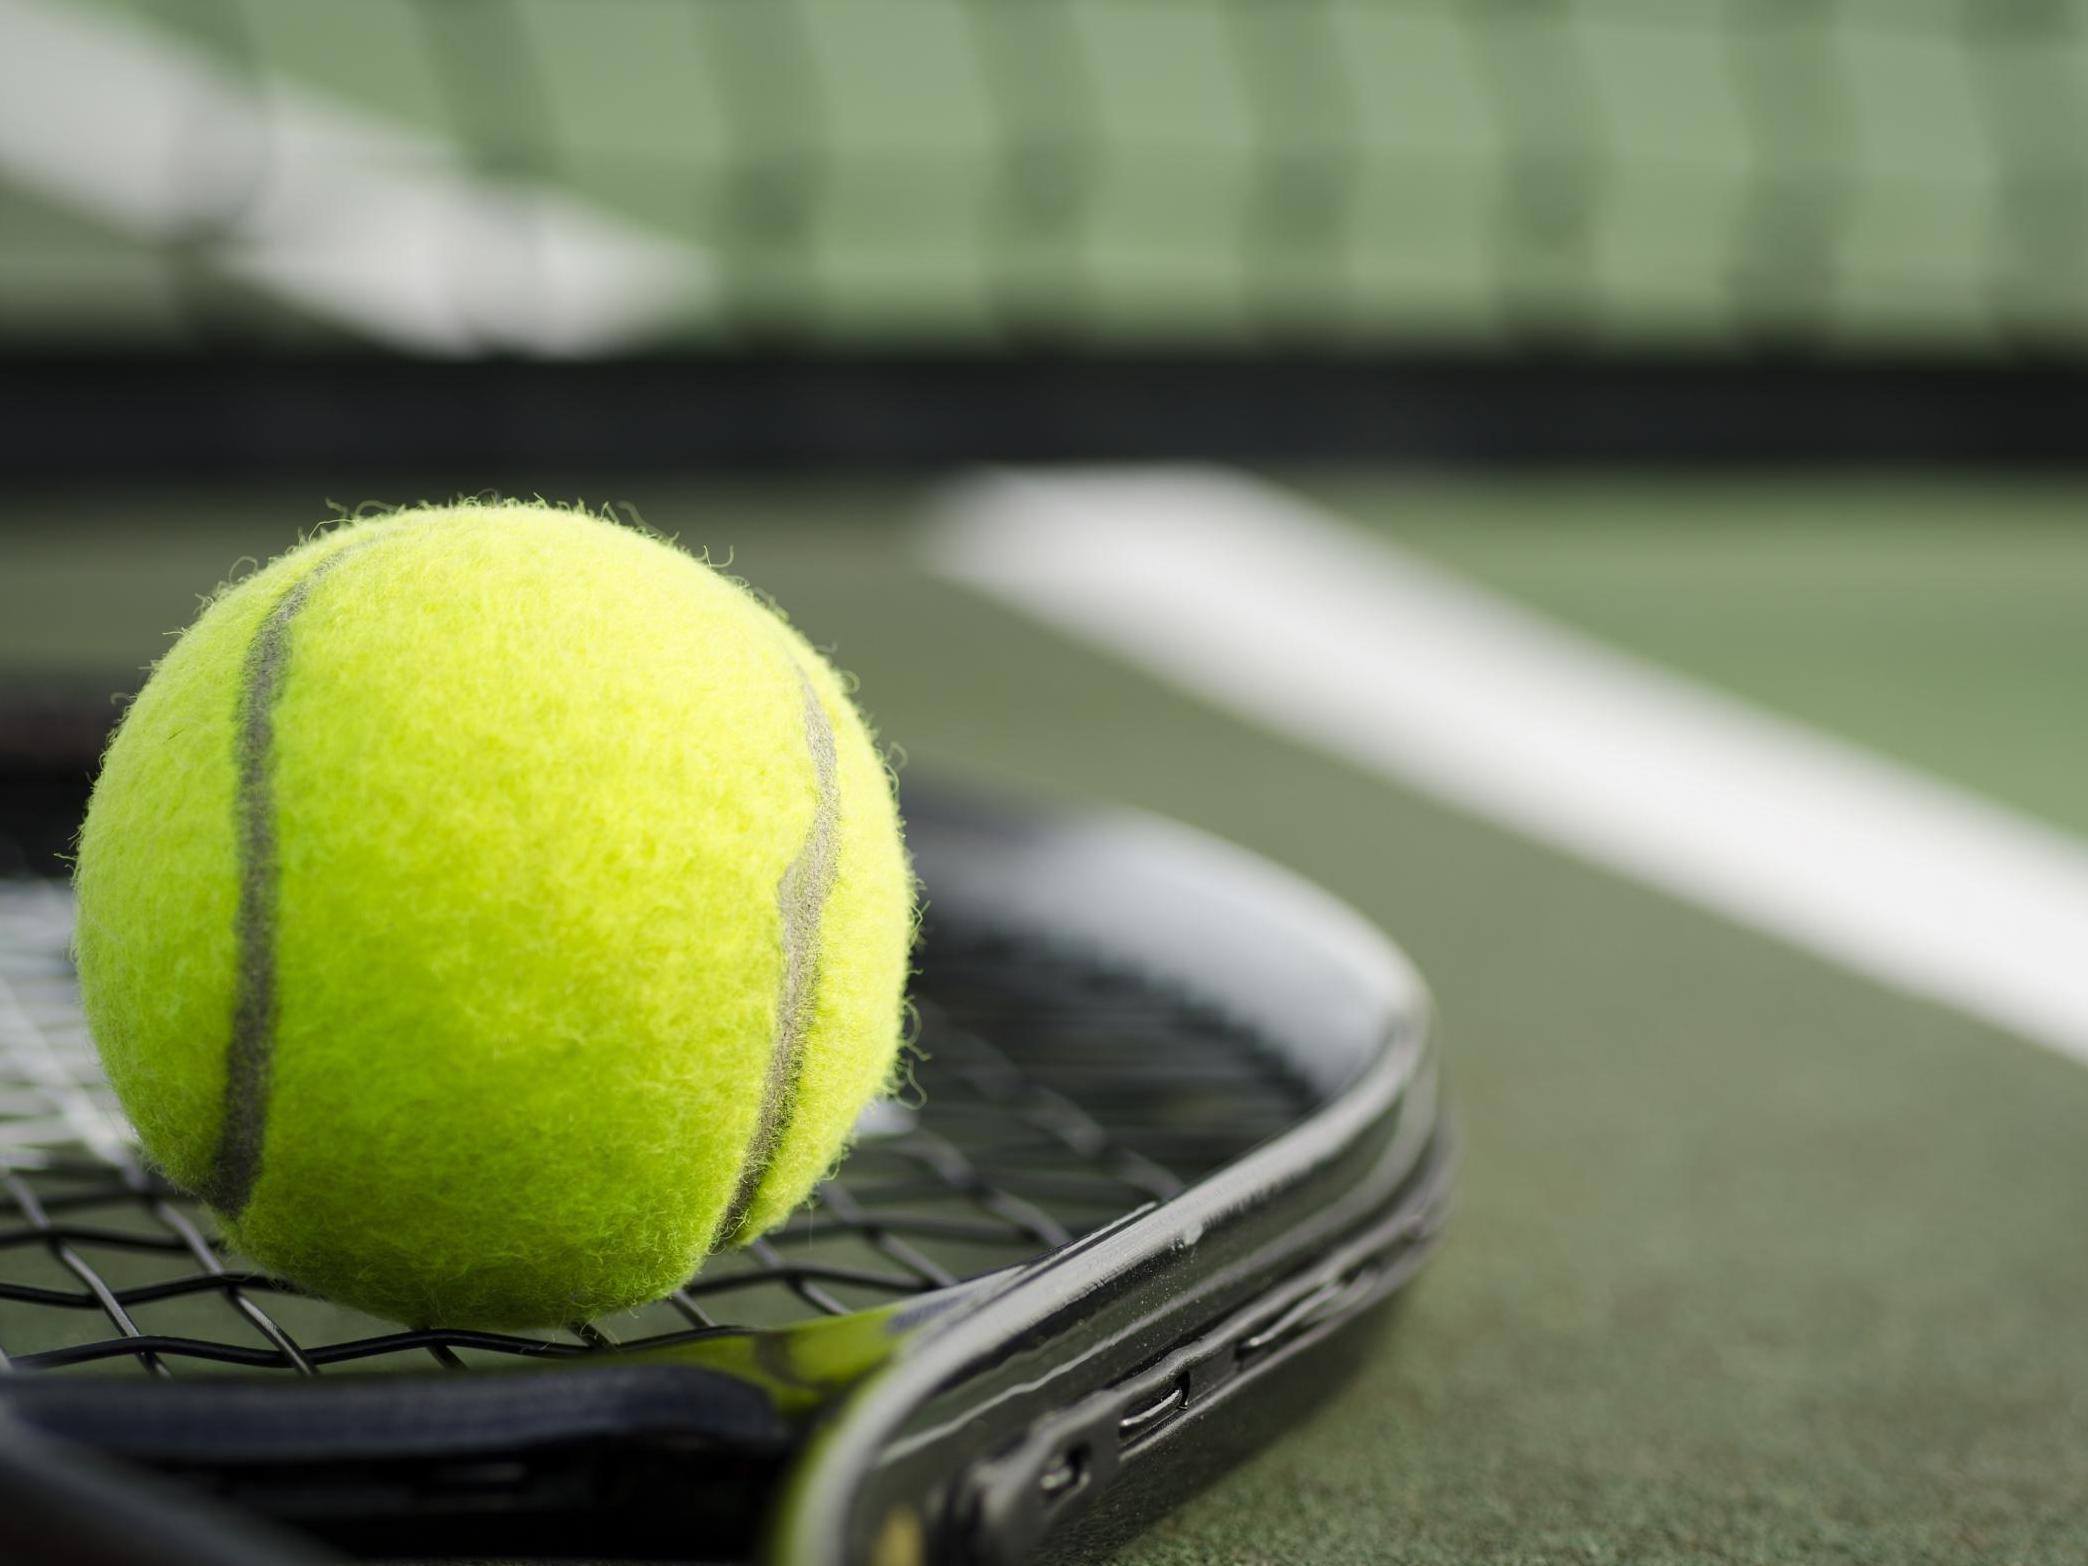 The radical plan to bring tennis back amid coronavirus | The ...